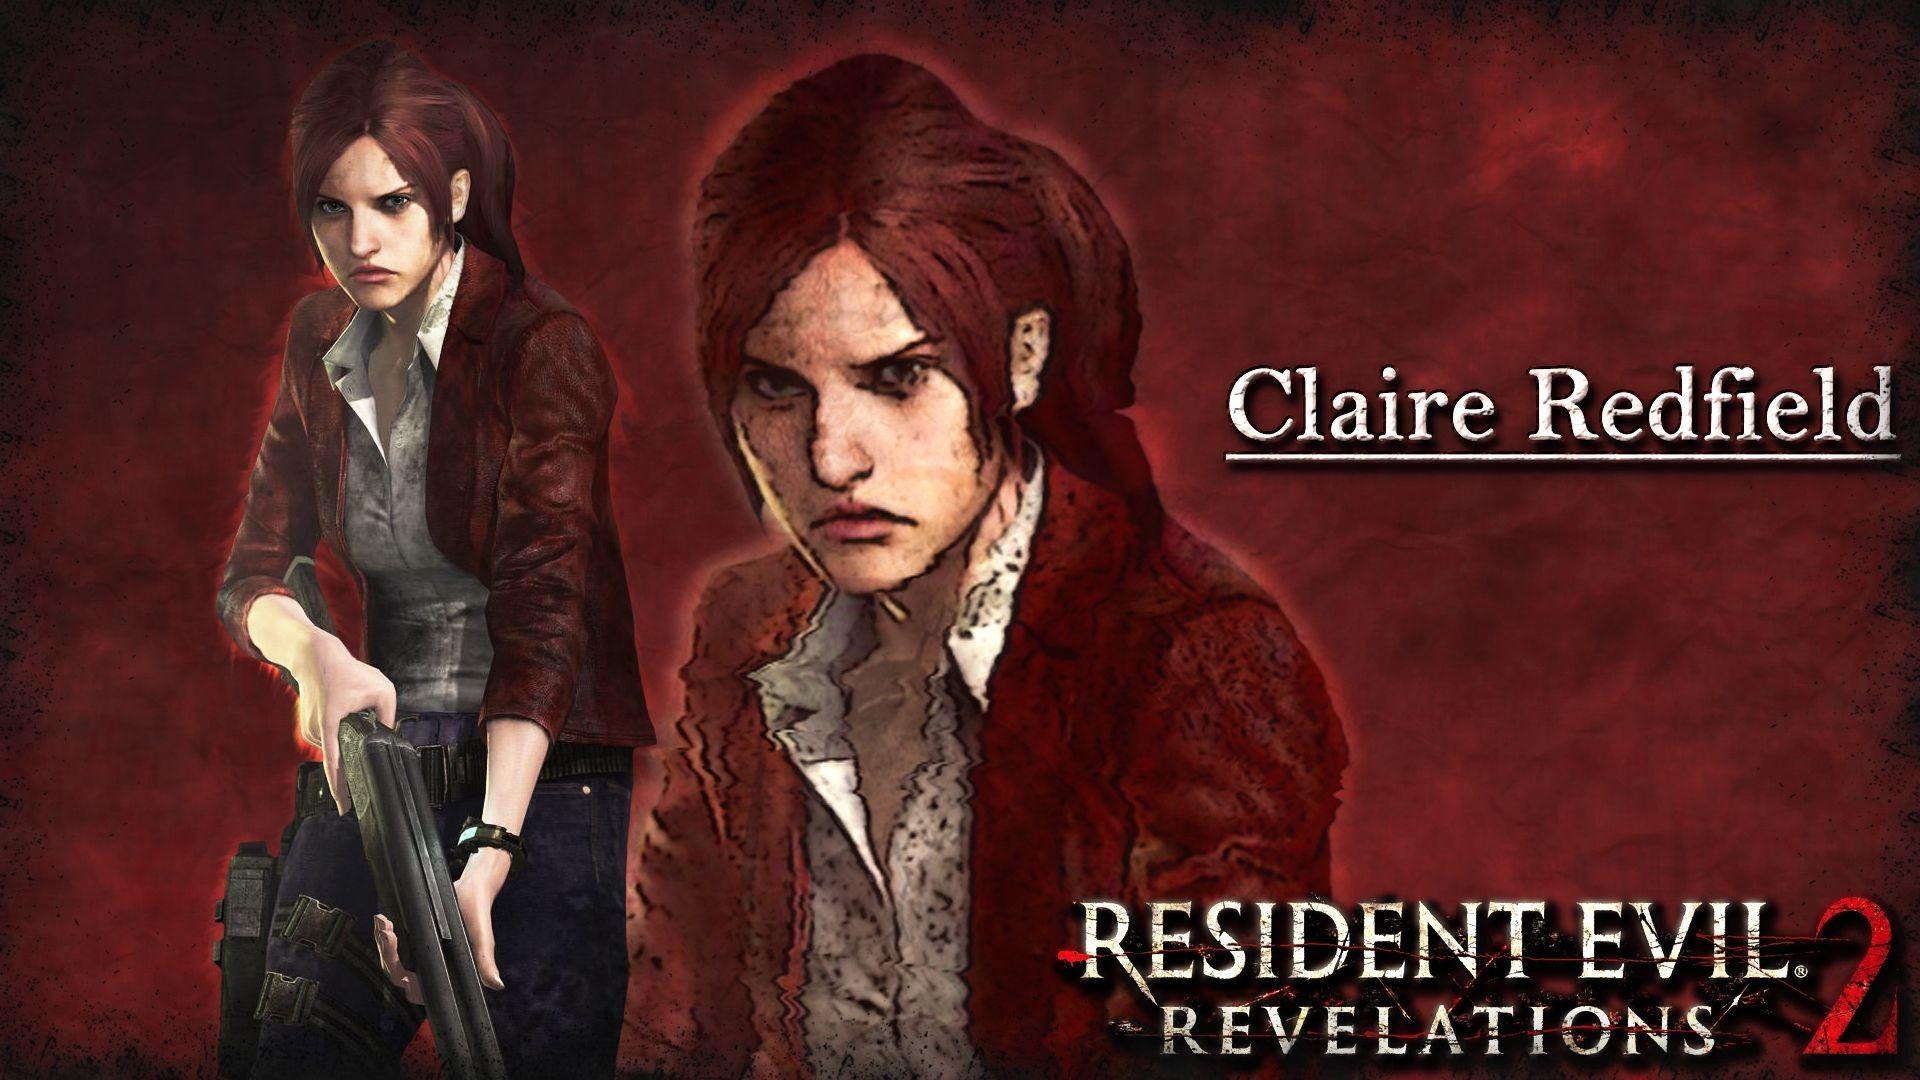 Claire Redfield Fantasy Art  Resident Evil 2 Remake Video Game 4K  wallpaper download